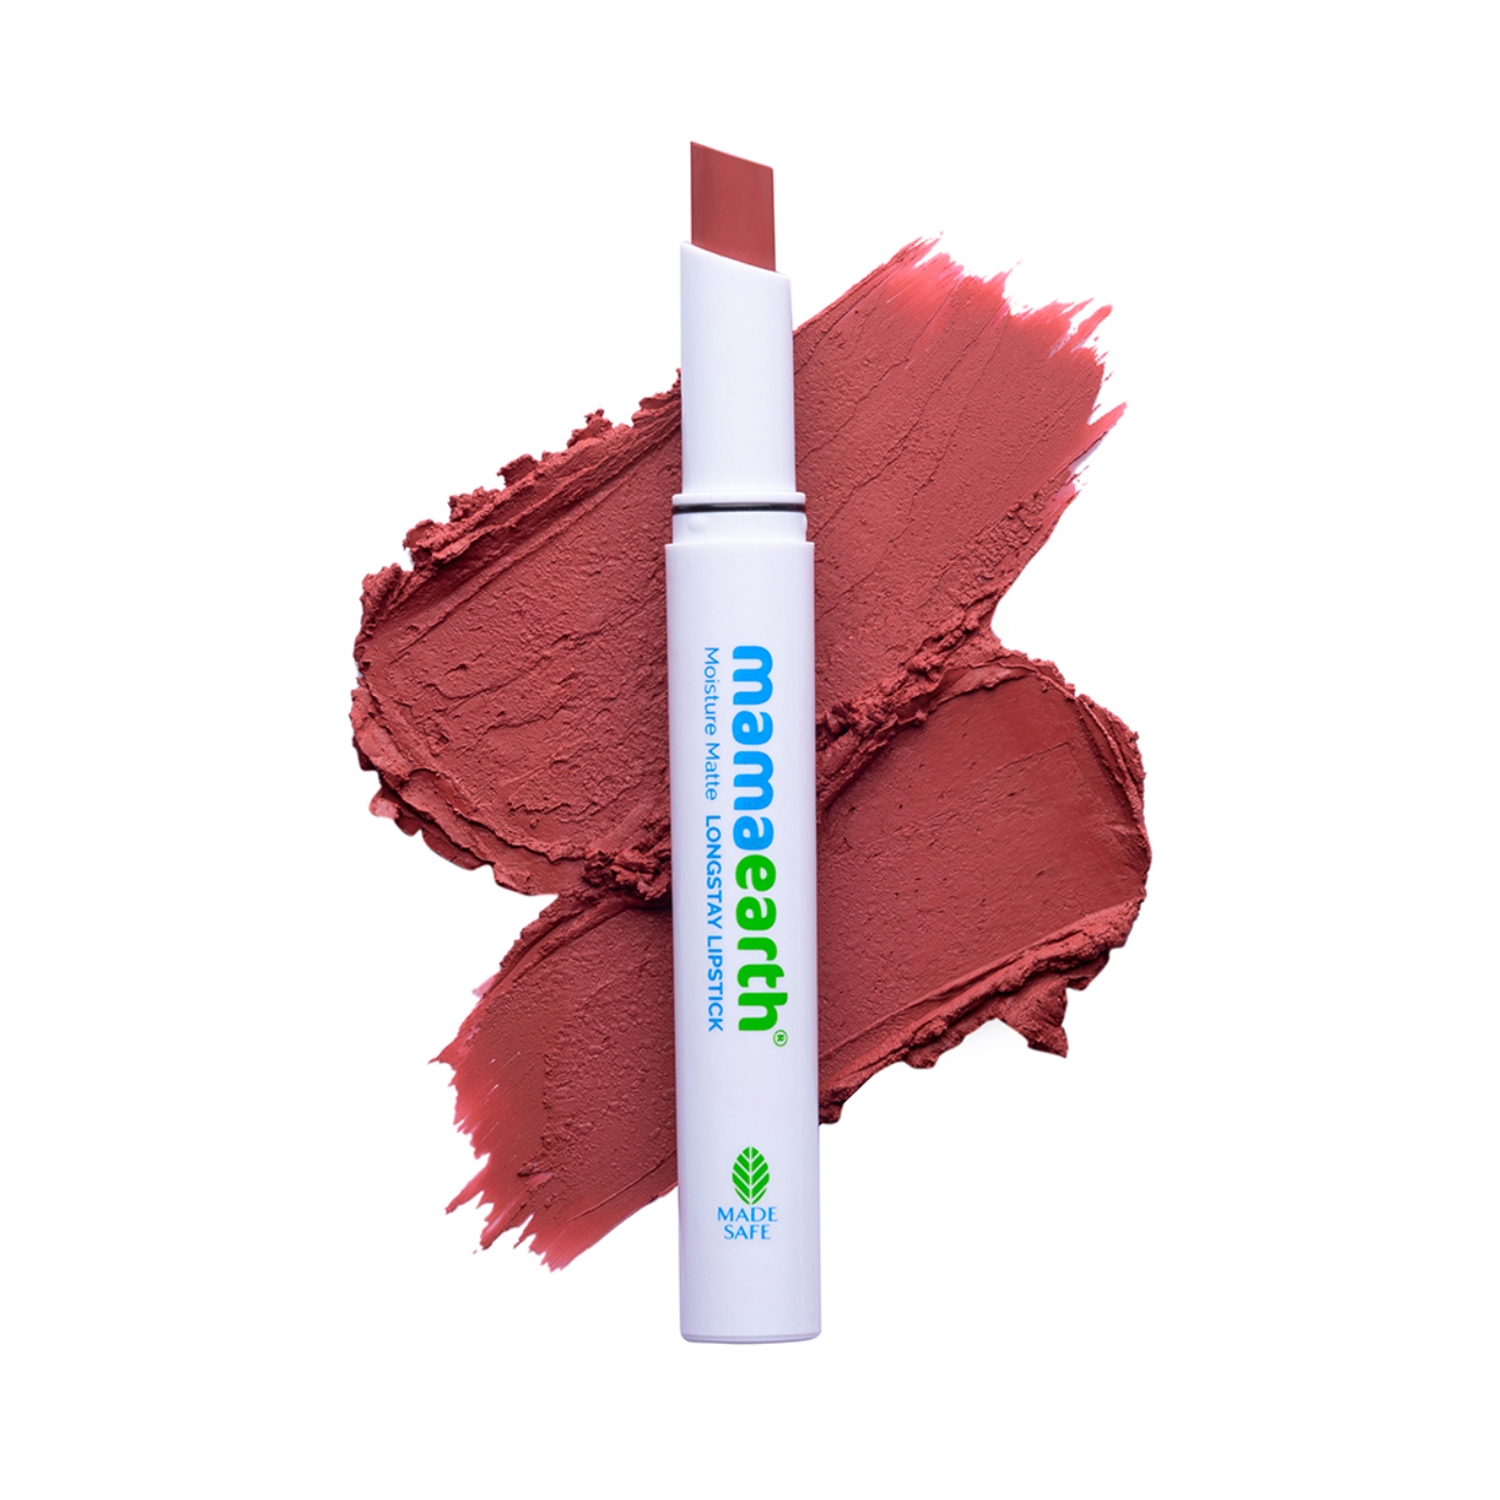 Mamaearth | Mamaearth Moisture Matte Longstay Lipstick With Avocado Oil & Vitamin E - 01 Carnation Nude (2g)